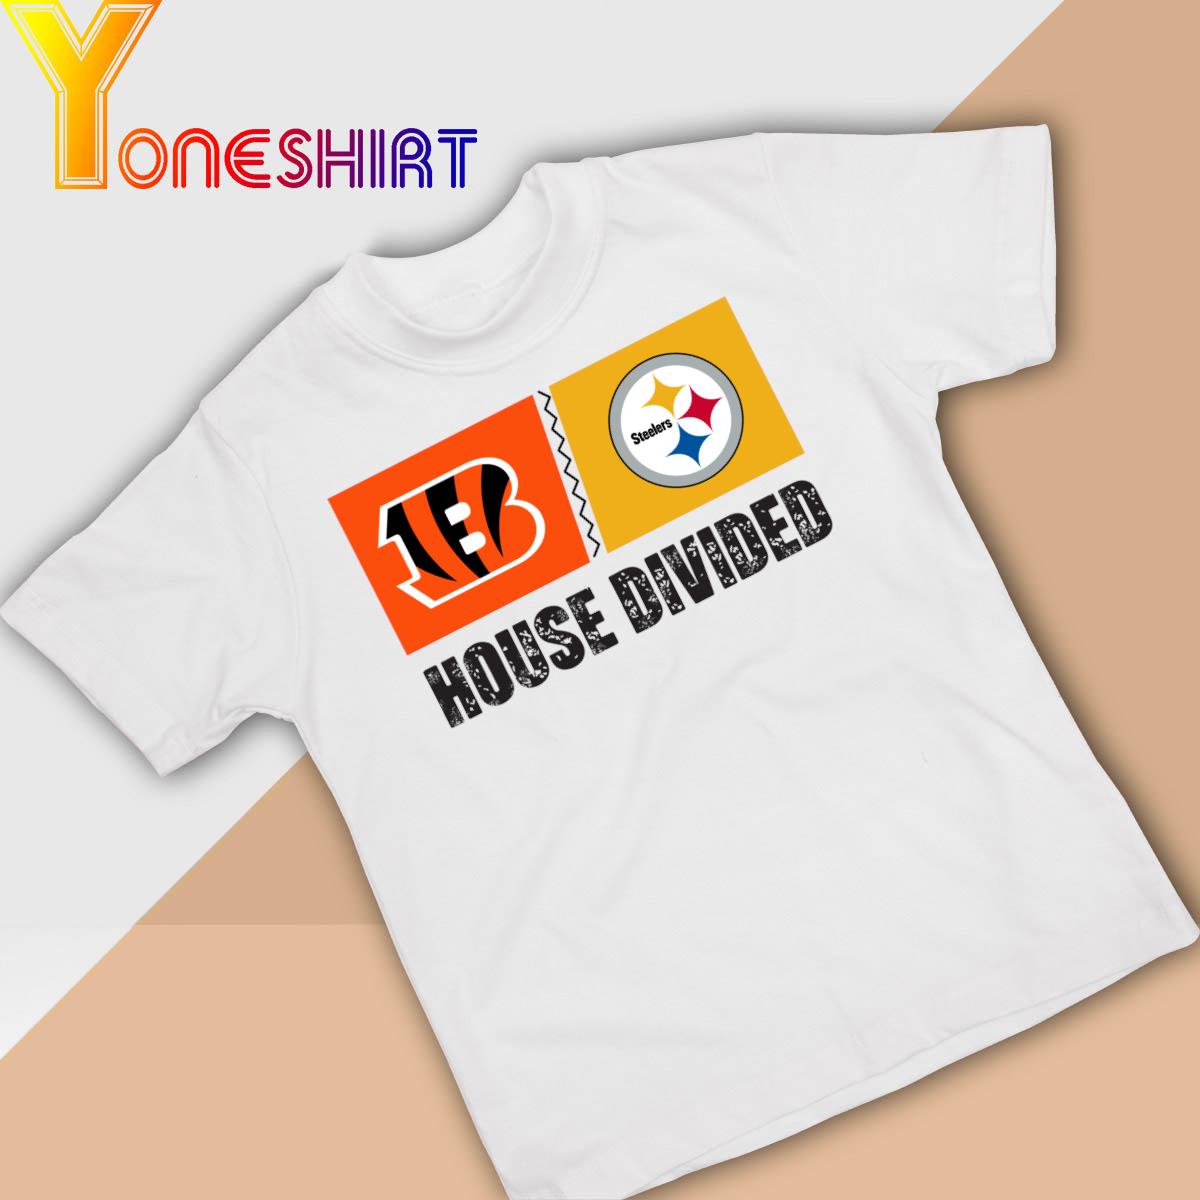 Cincinnati Bengals vs Pittsburgh Steelers House Divided shirt